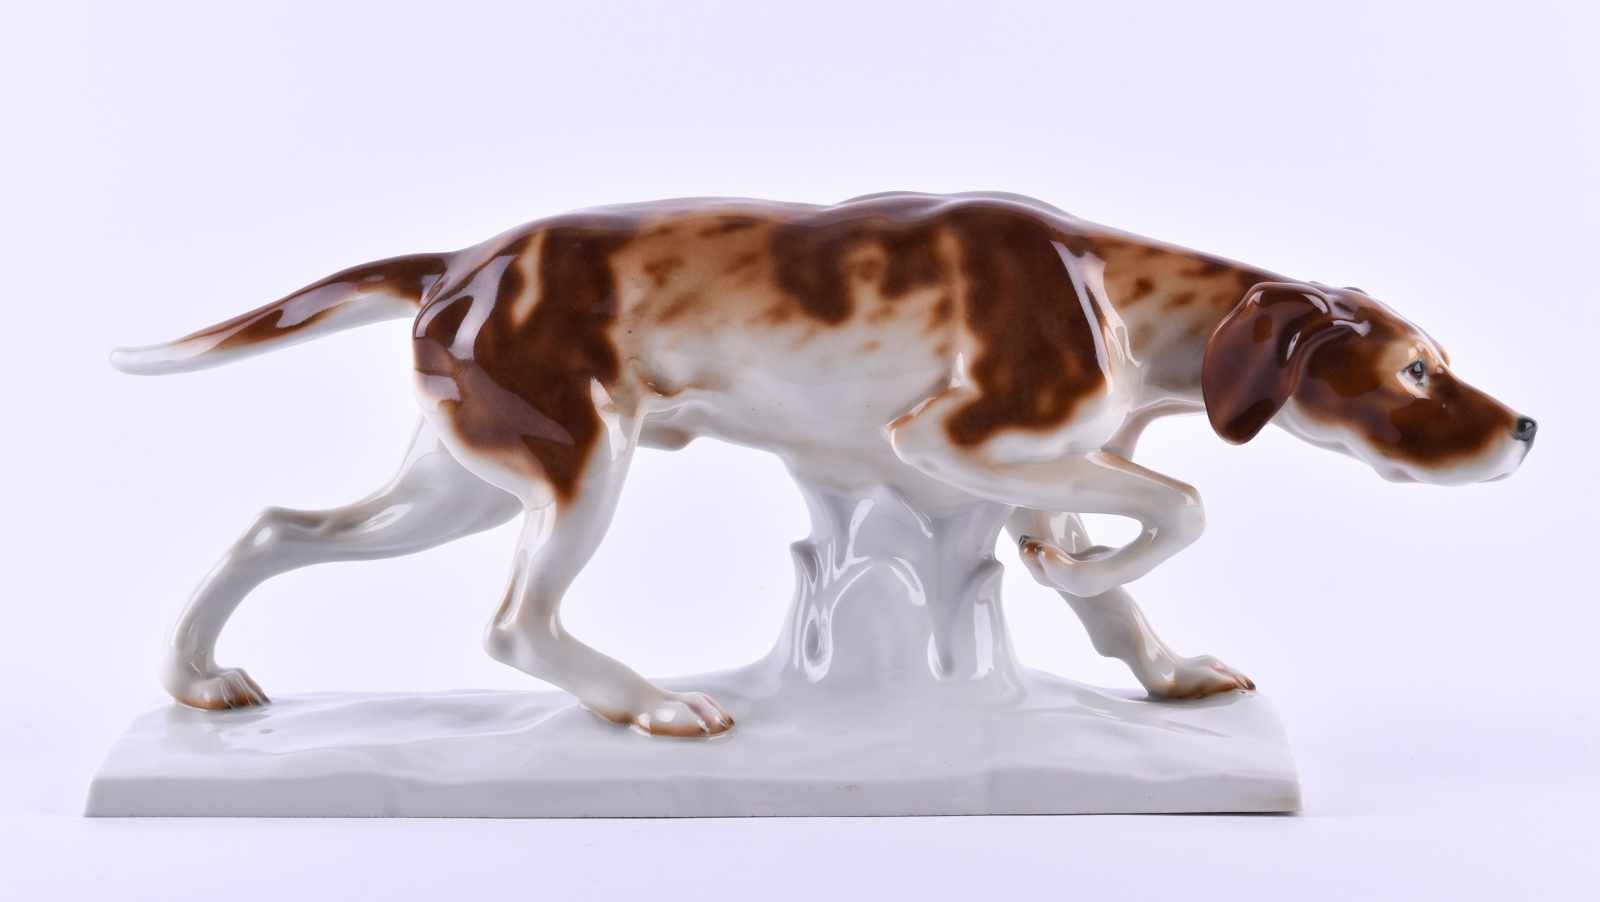 Jagdhund Goebelfarbig staffiert, gemarkt, 35 cm x 9,5 cm x 15,5 cmHunting dog Goebelcolorfully